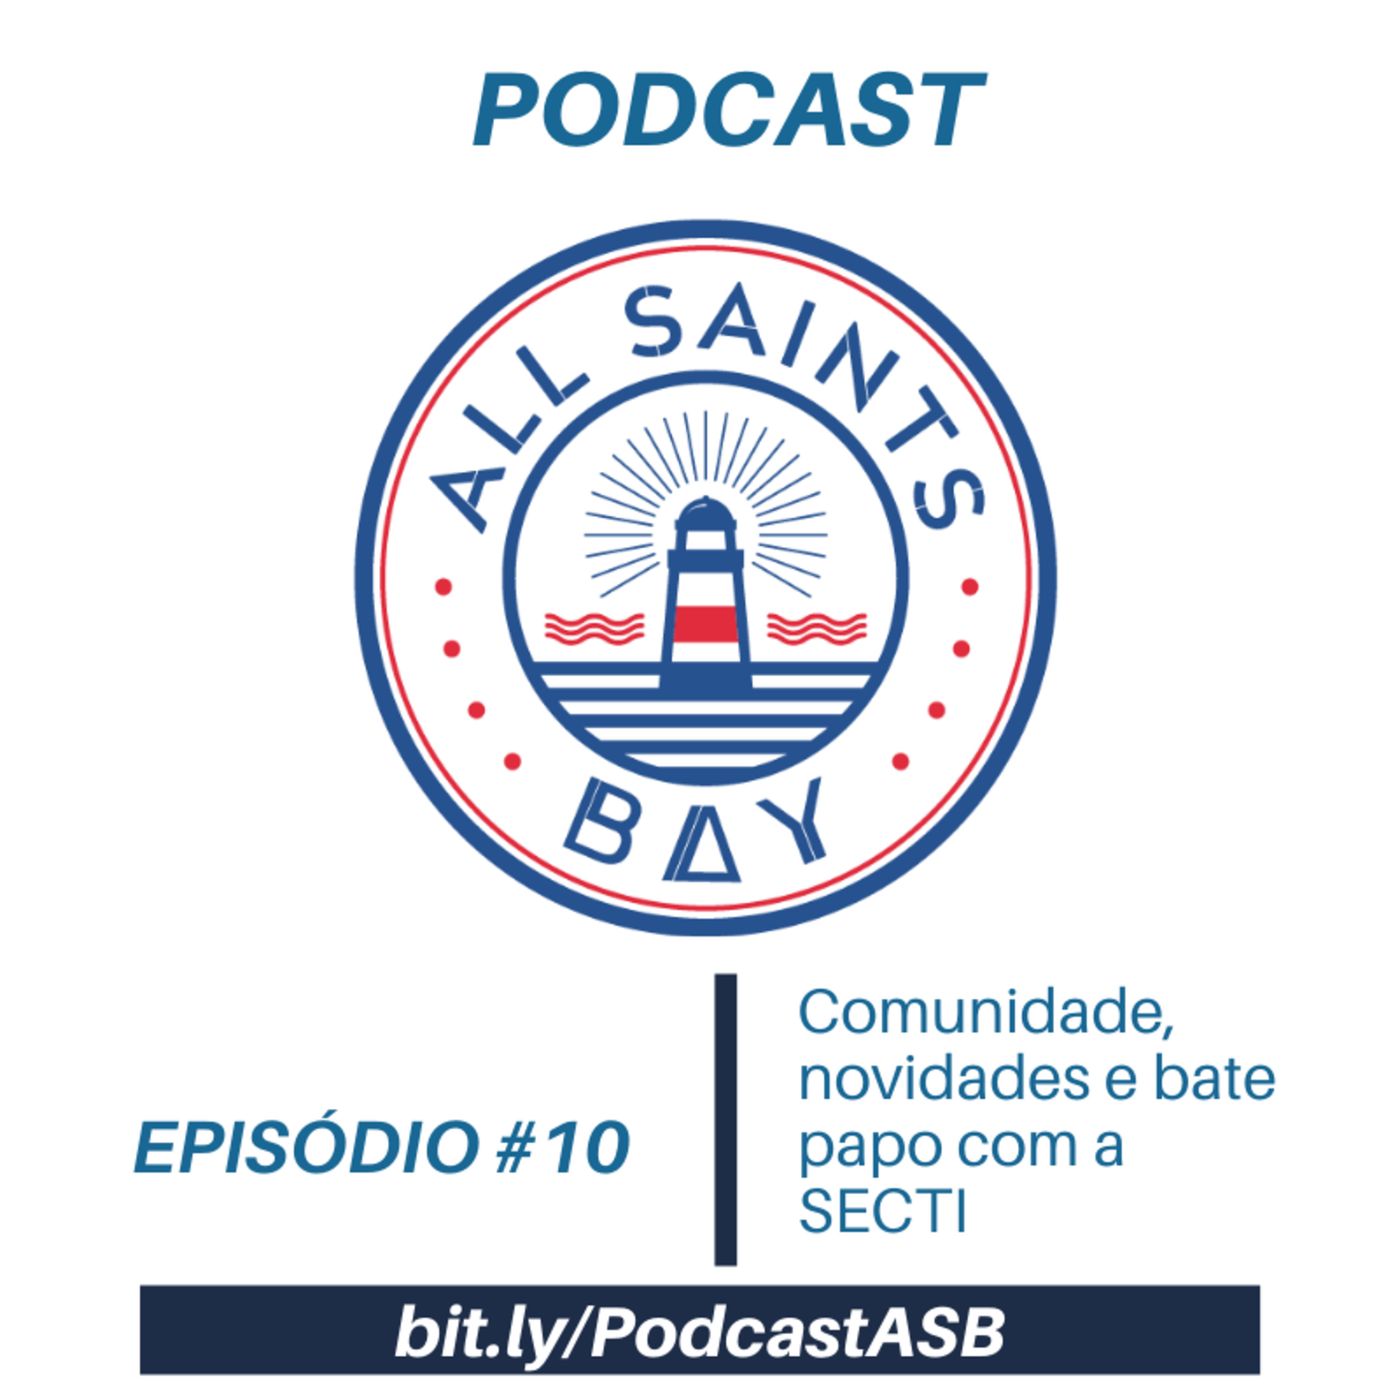 Podcast All Saints Bay #10